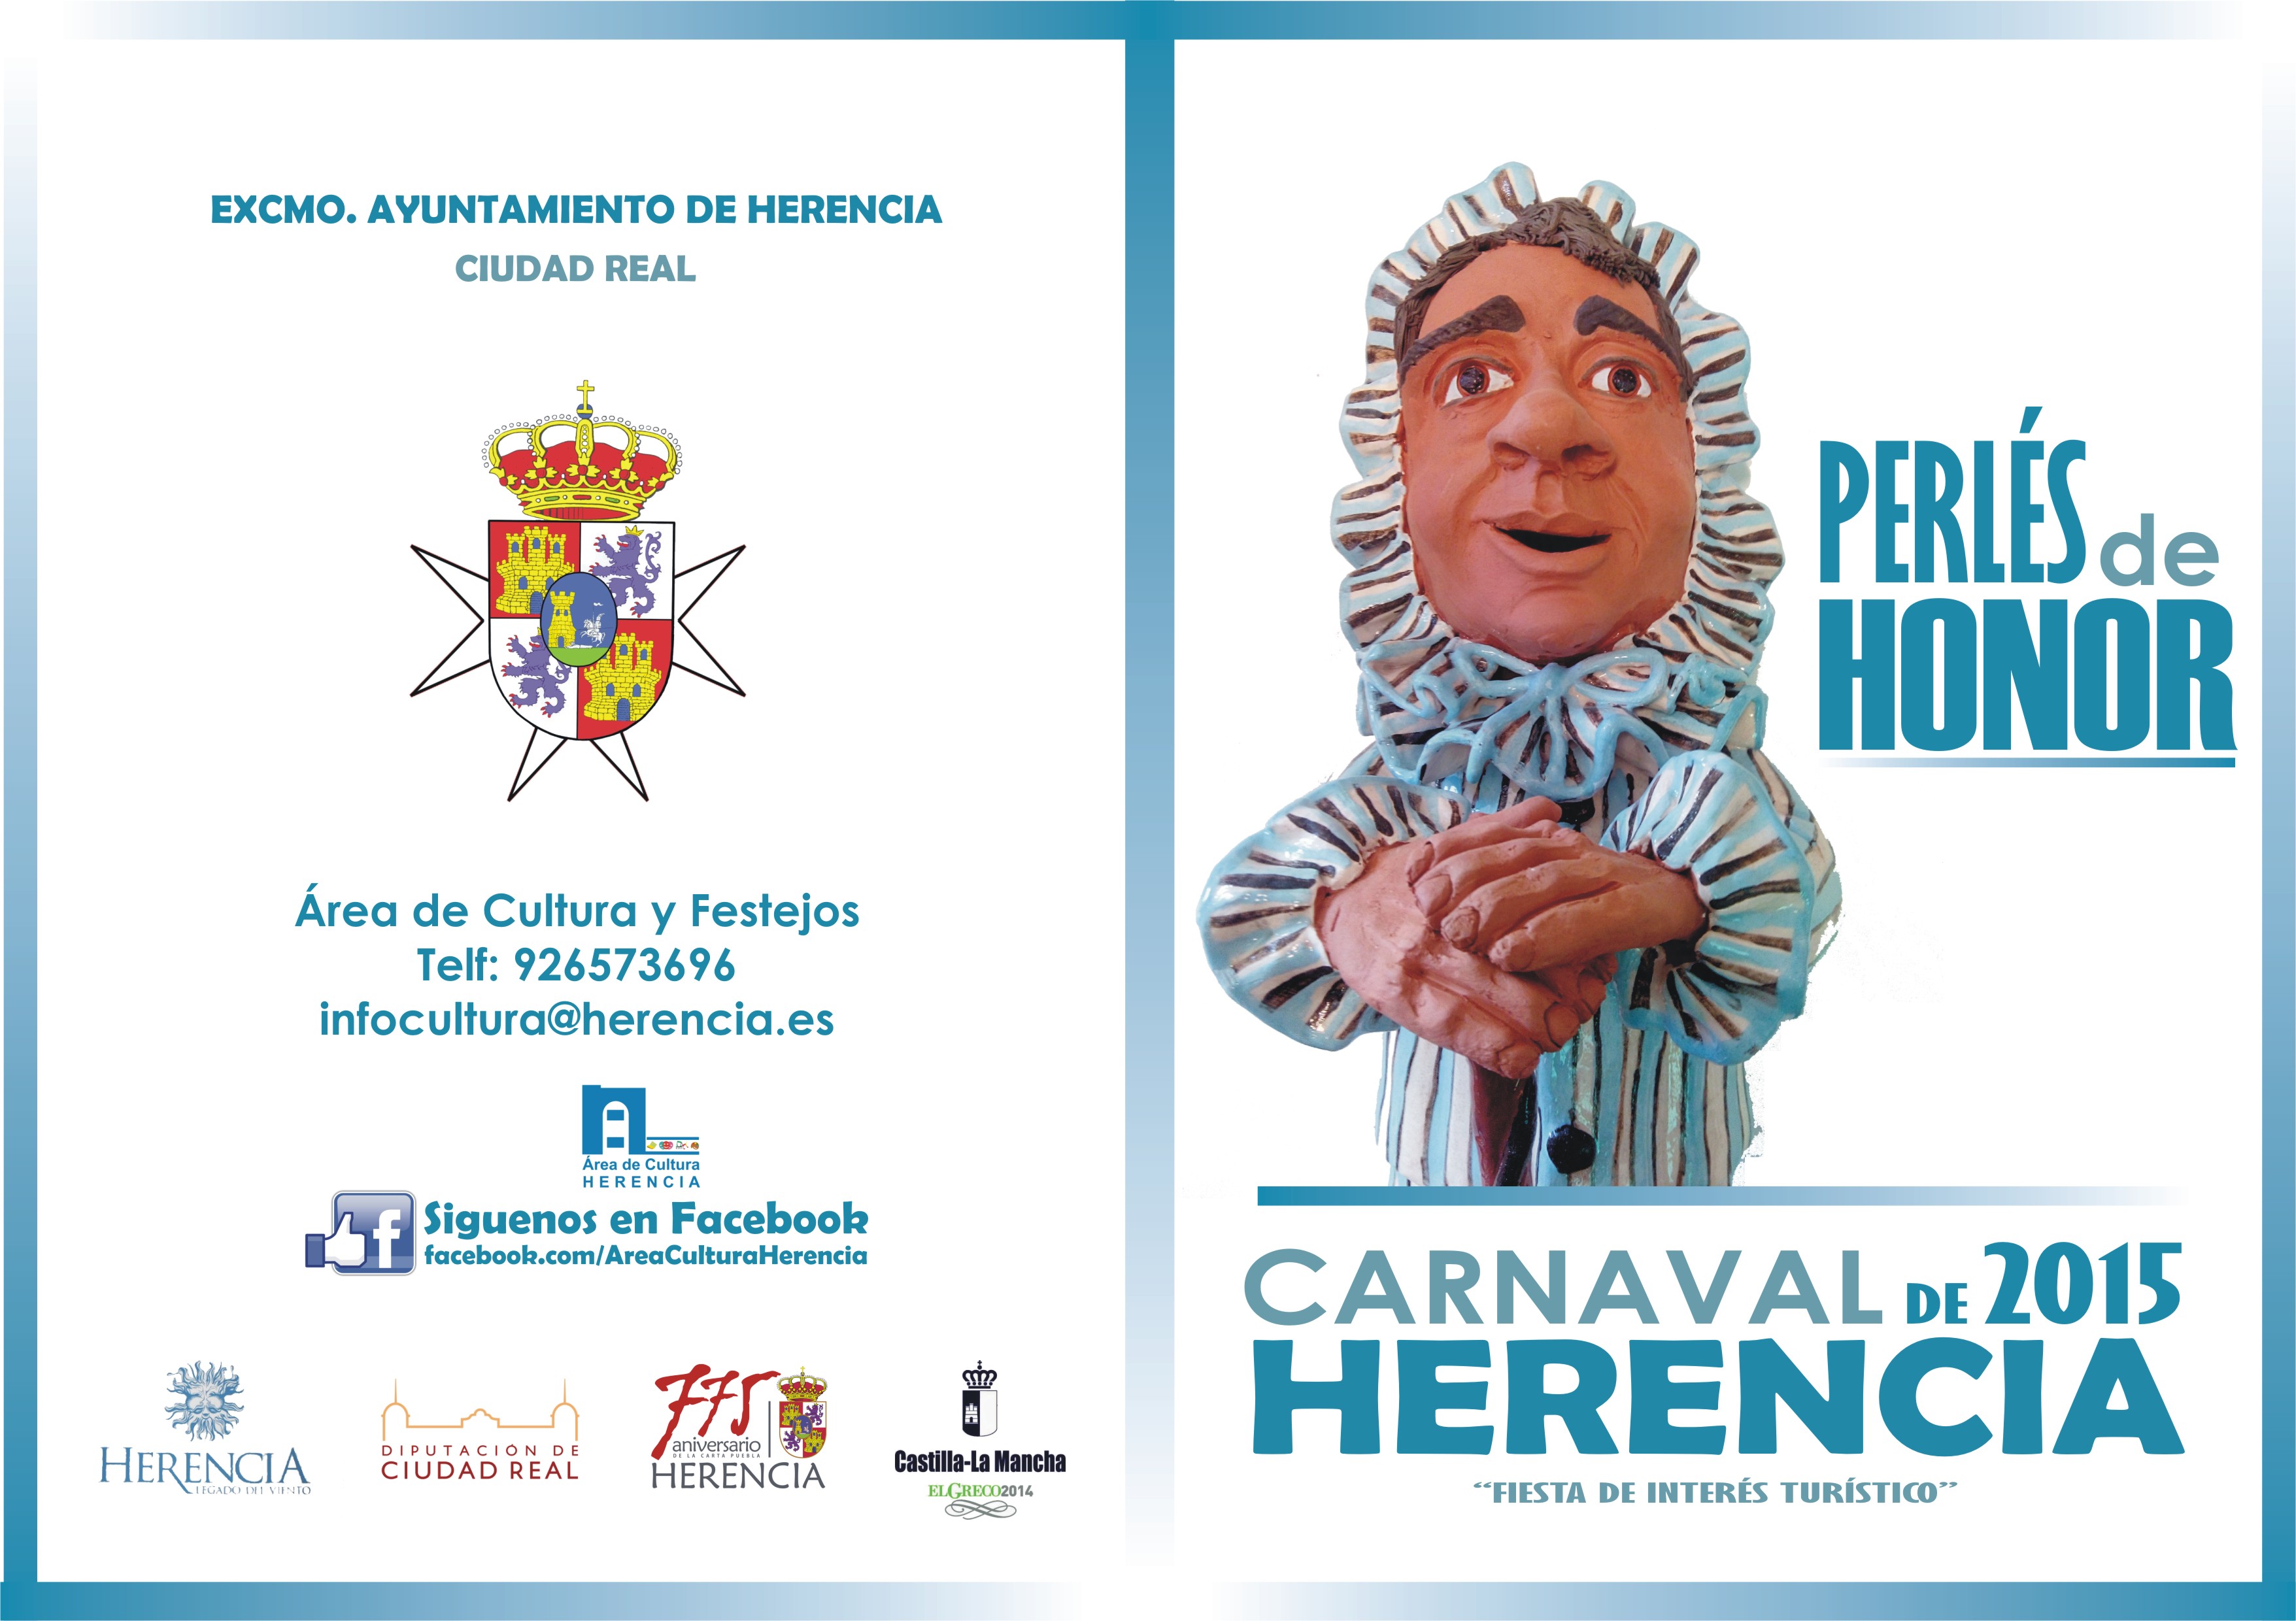 perles-de-honor-carnaval-de-herencia-2015